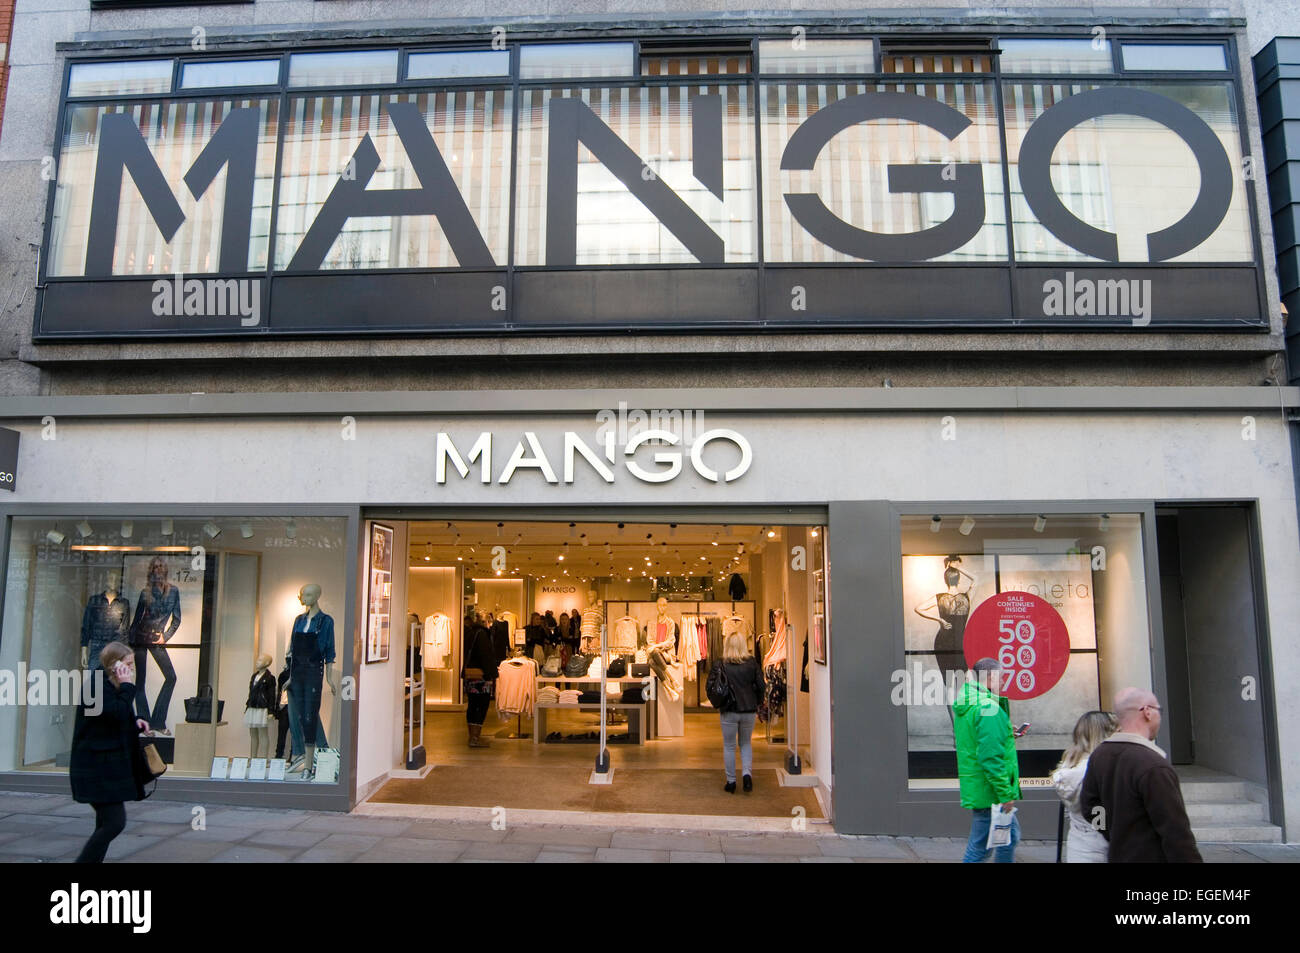 mango womens clothes shop shops fashion textiles retailing retailer retail brand branded Stock Photo